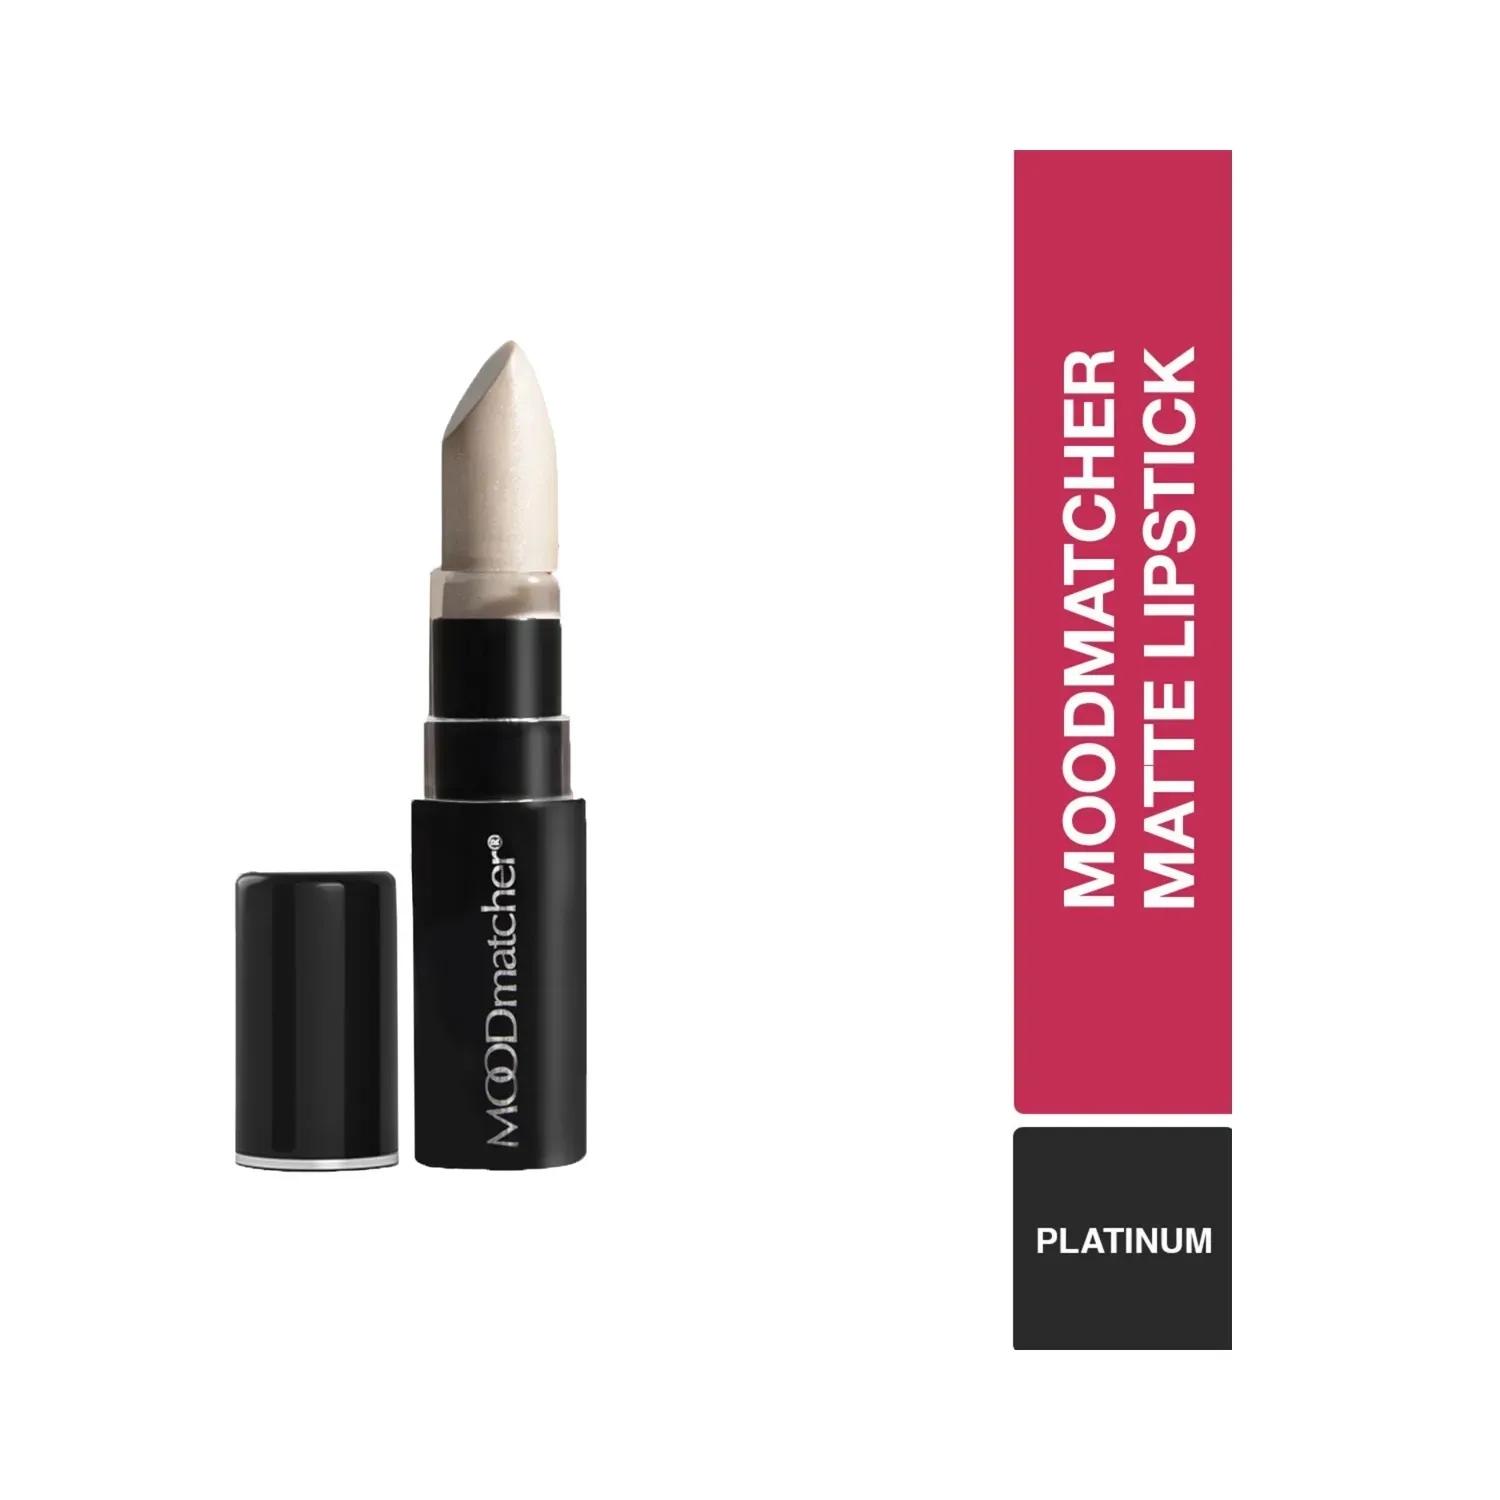 fran wilson moodmatcher lipstick - platinum (3.5g)